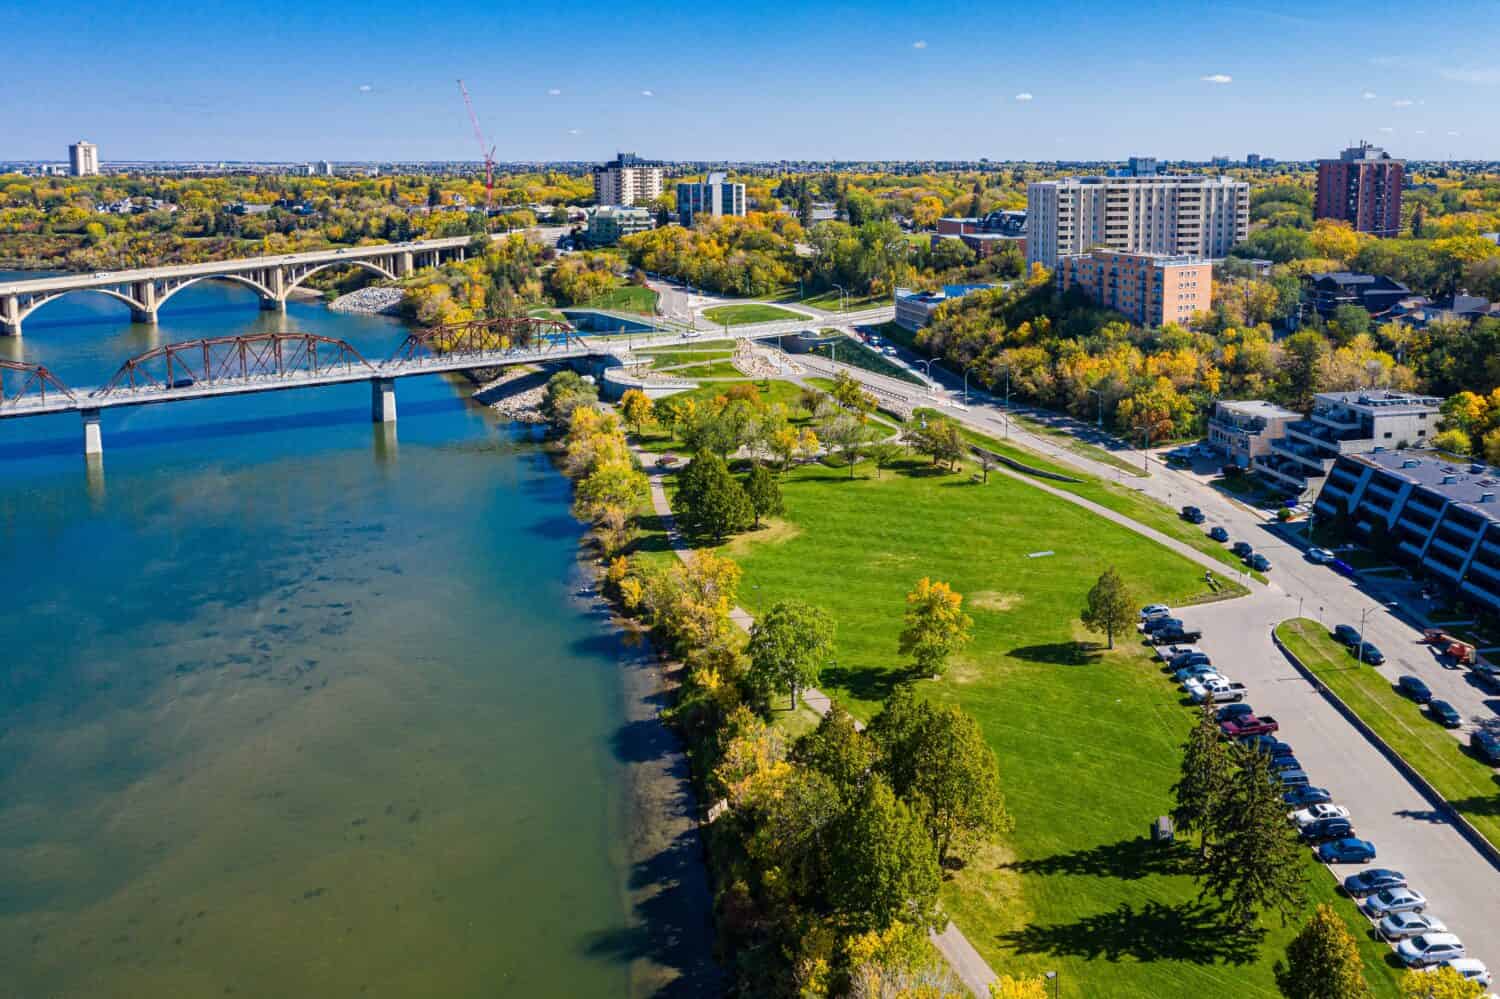 Rotary Park in Saskatoon, Saskatchewan